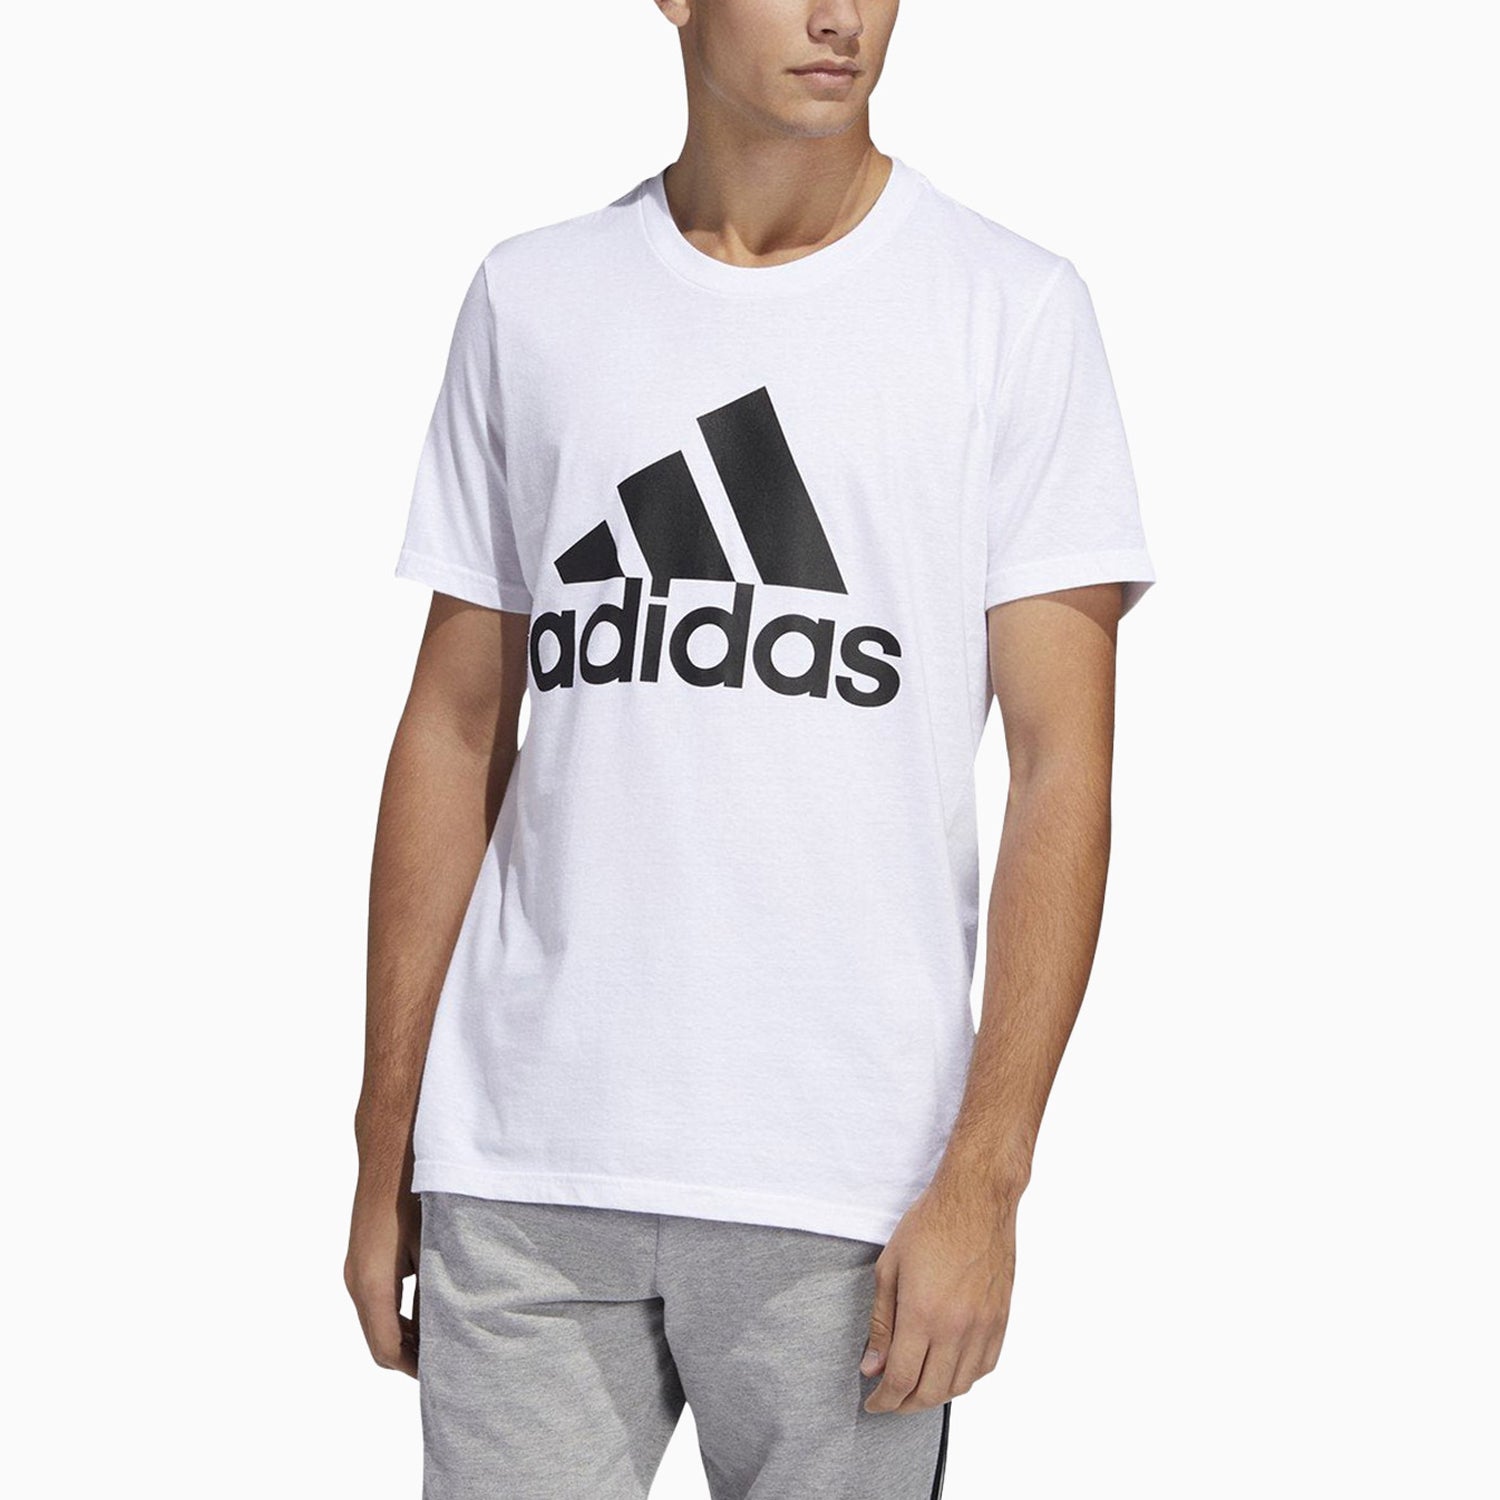 adidas-mens-badge-of-sport-t-shirt-fs8713